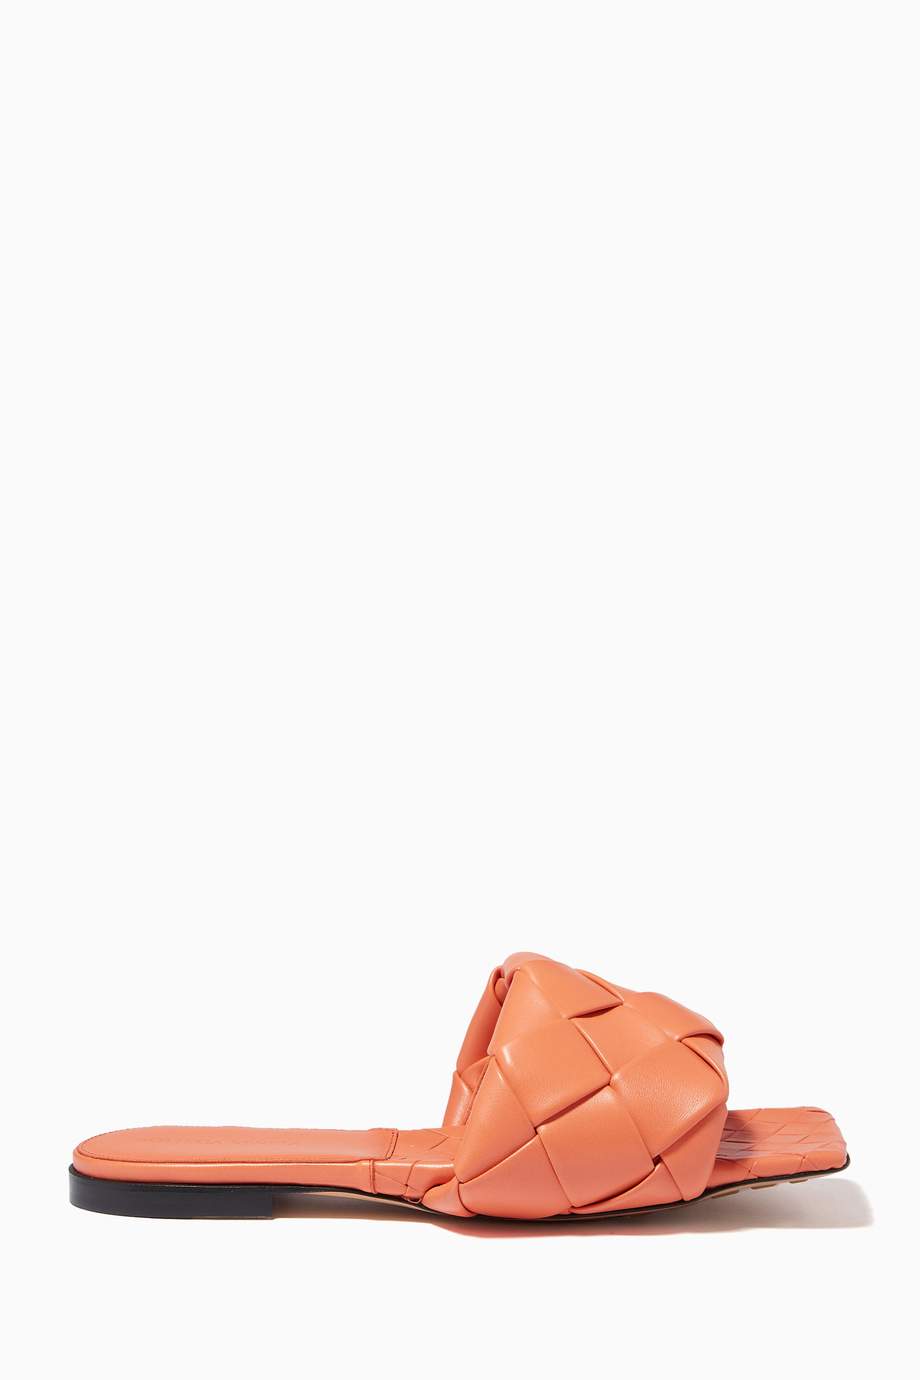 Shop Bottega Veneta Orange Lido Flat Sandals in Intrecciato Nappa 